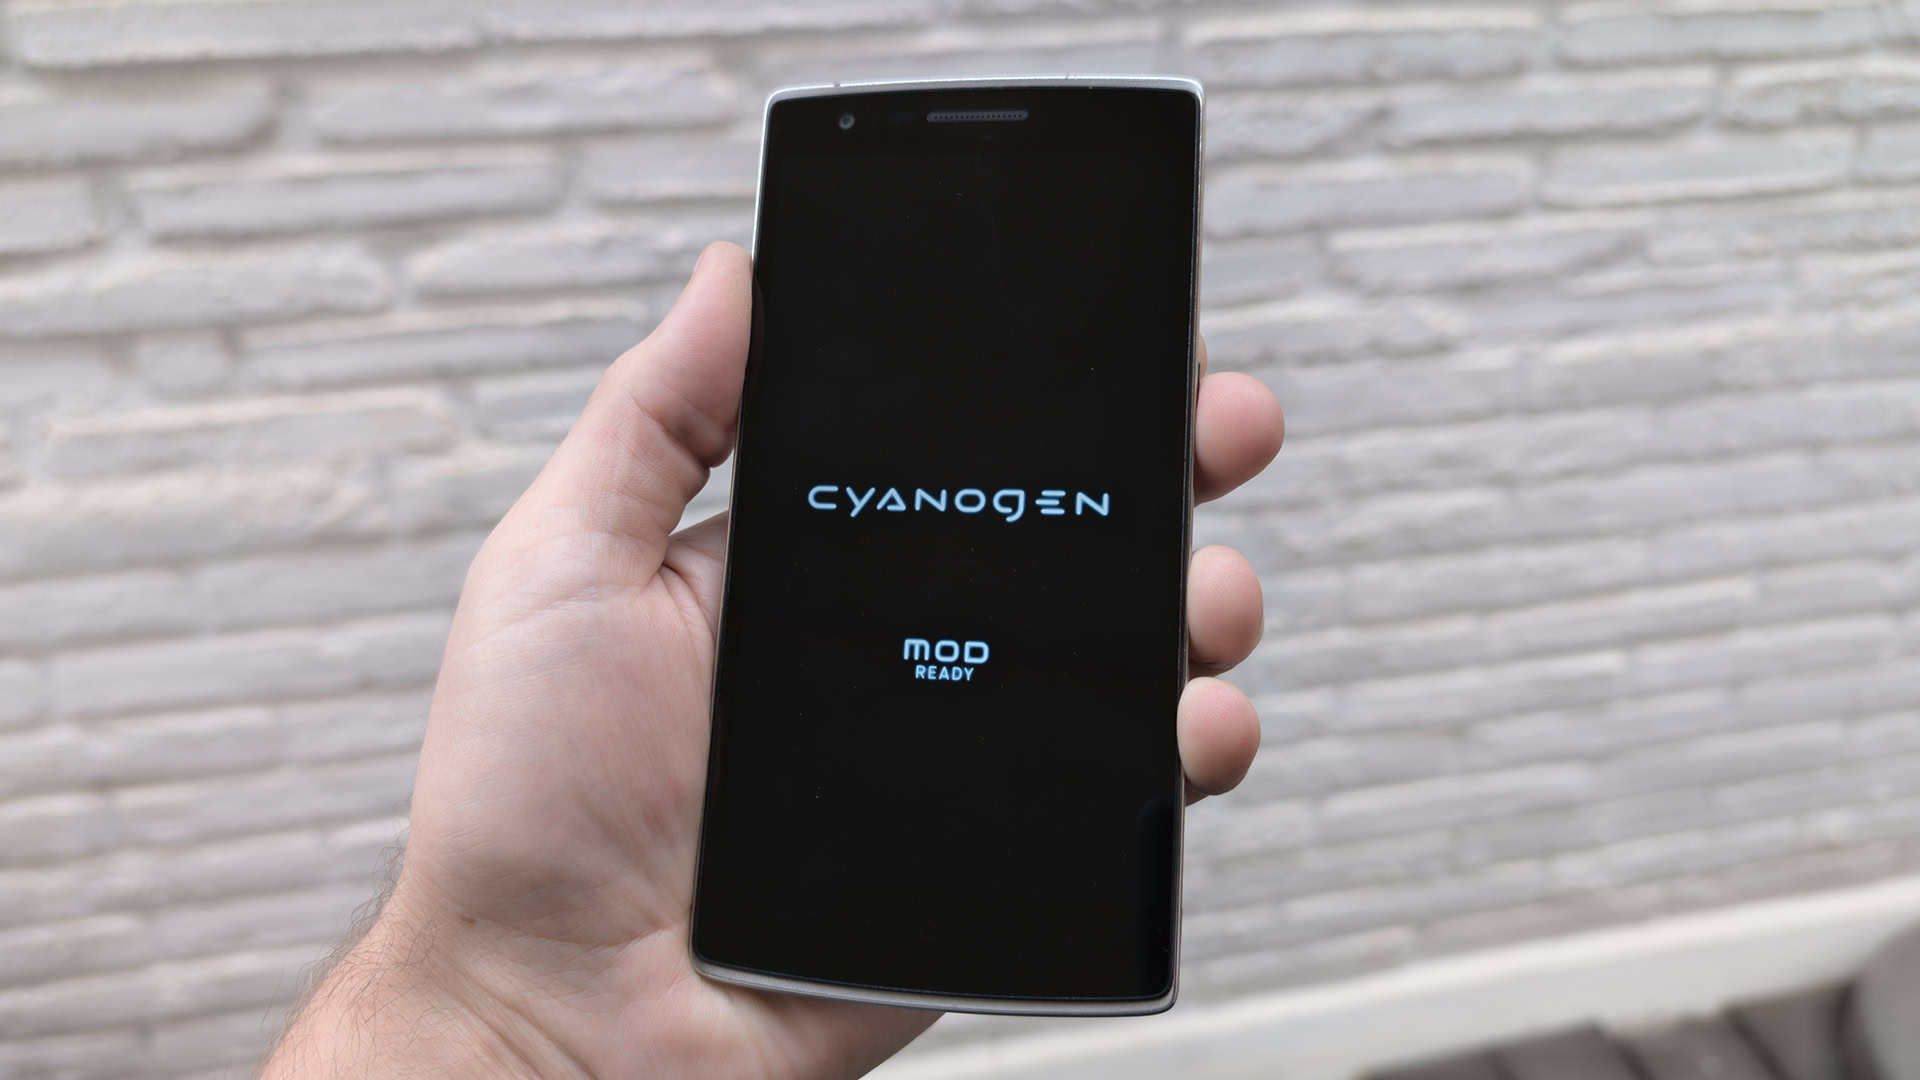 OnePlus One with Cyanogen Logo on Screen